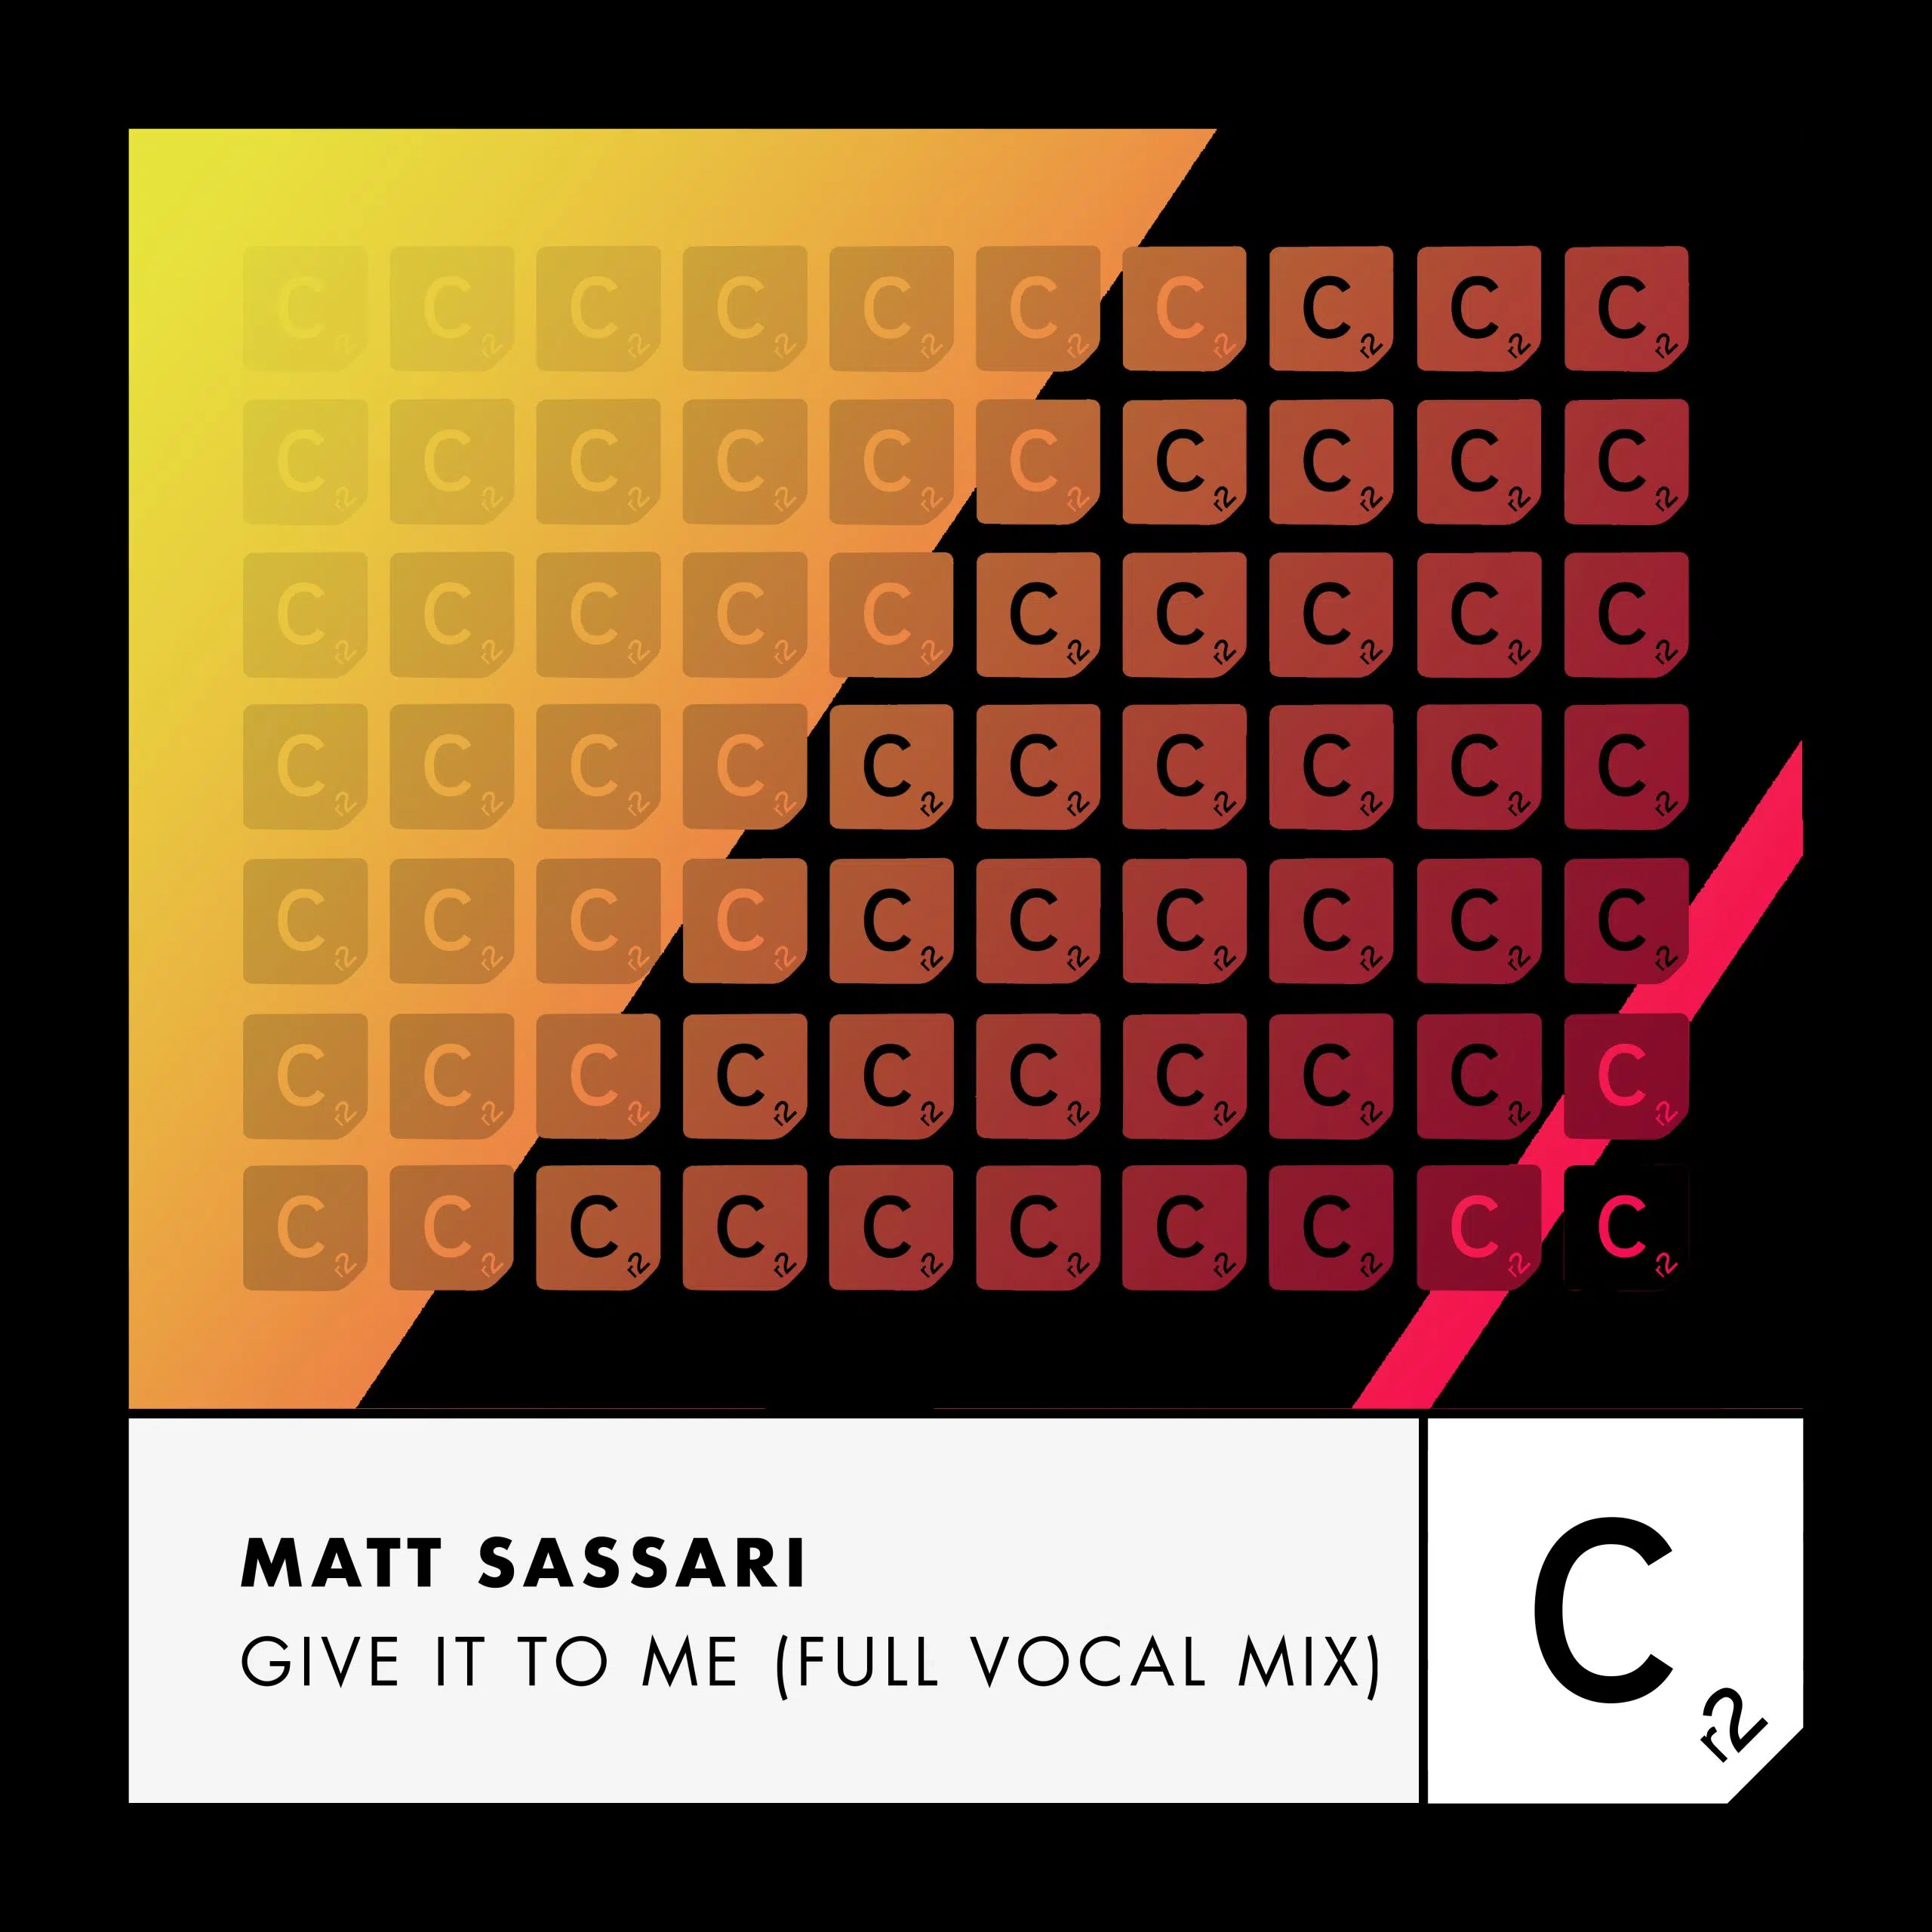 Full Vocal Mix of Matt Sassari “Give It To Me”